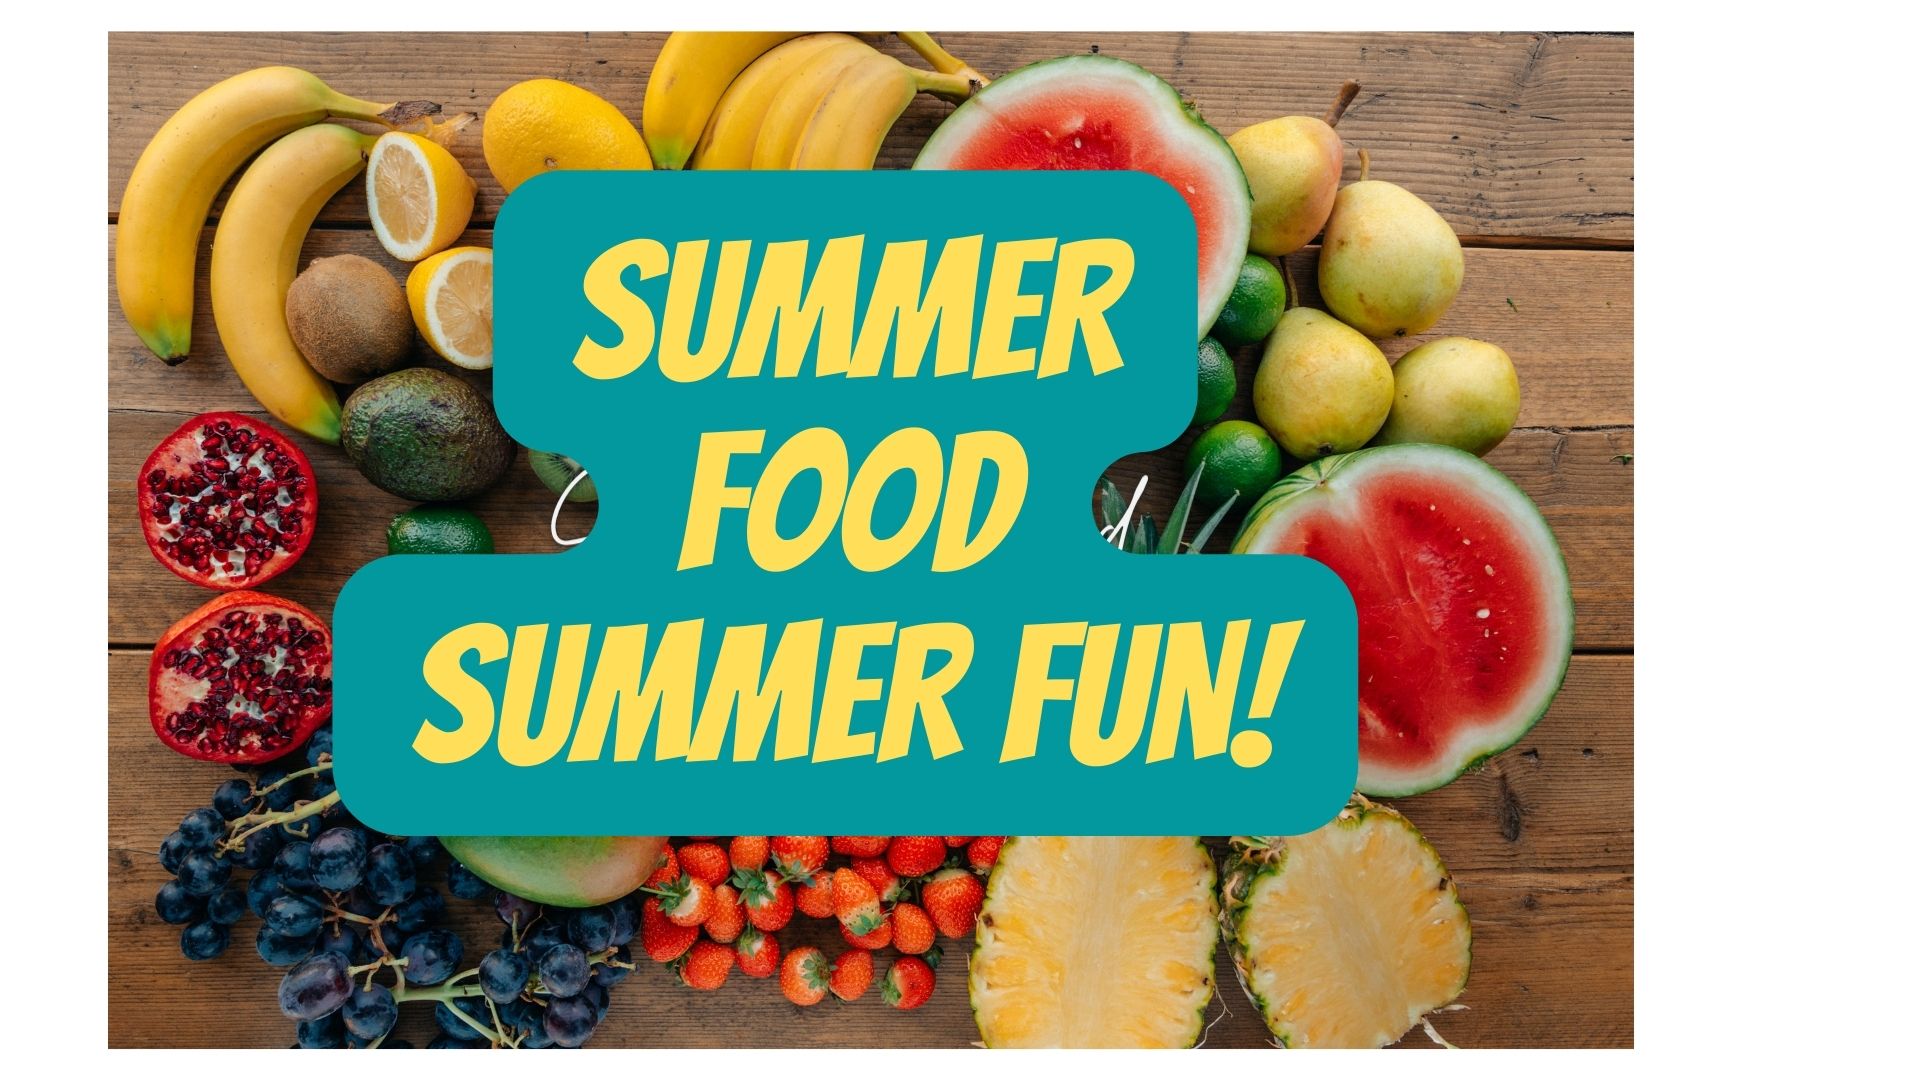 Image of Summer Food Summer Fun.